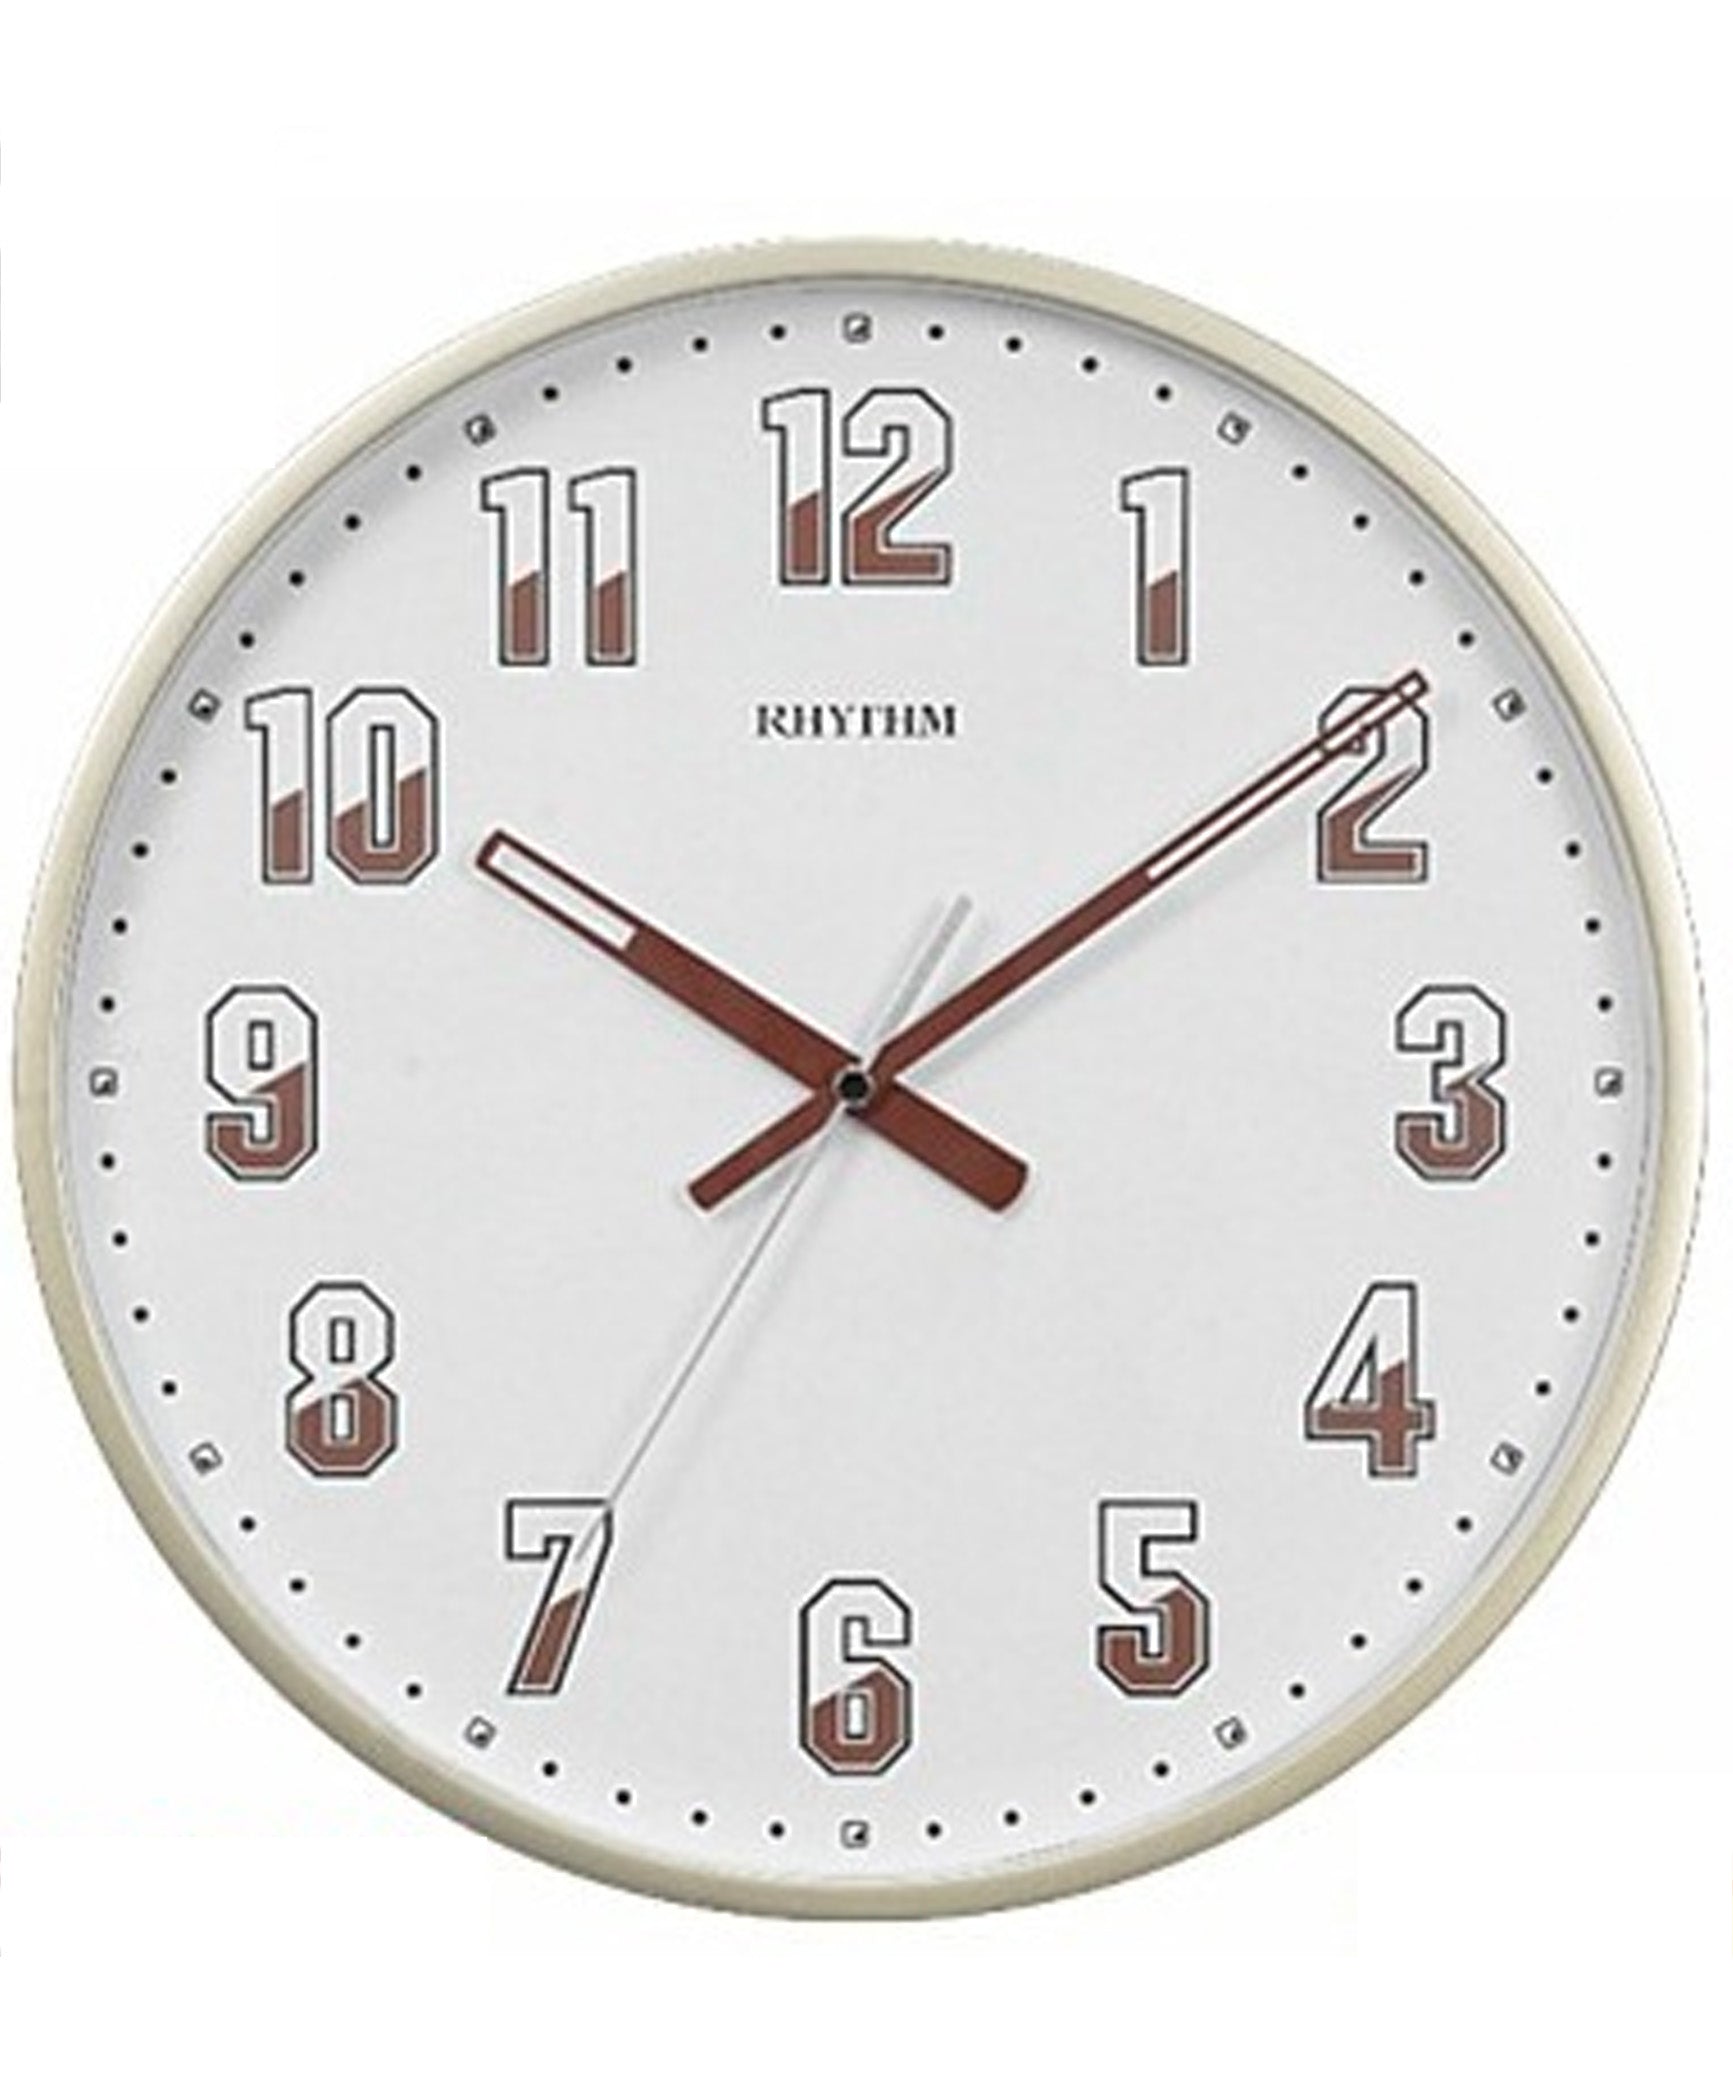 Rhythm Wall Clock Analog CMG599NR18 | stylish watch | accurate timekeeping | wall clock | round clock | Casio watch | wall watch | home décor | timepiece | Halabh.com